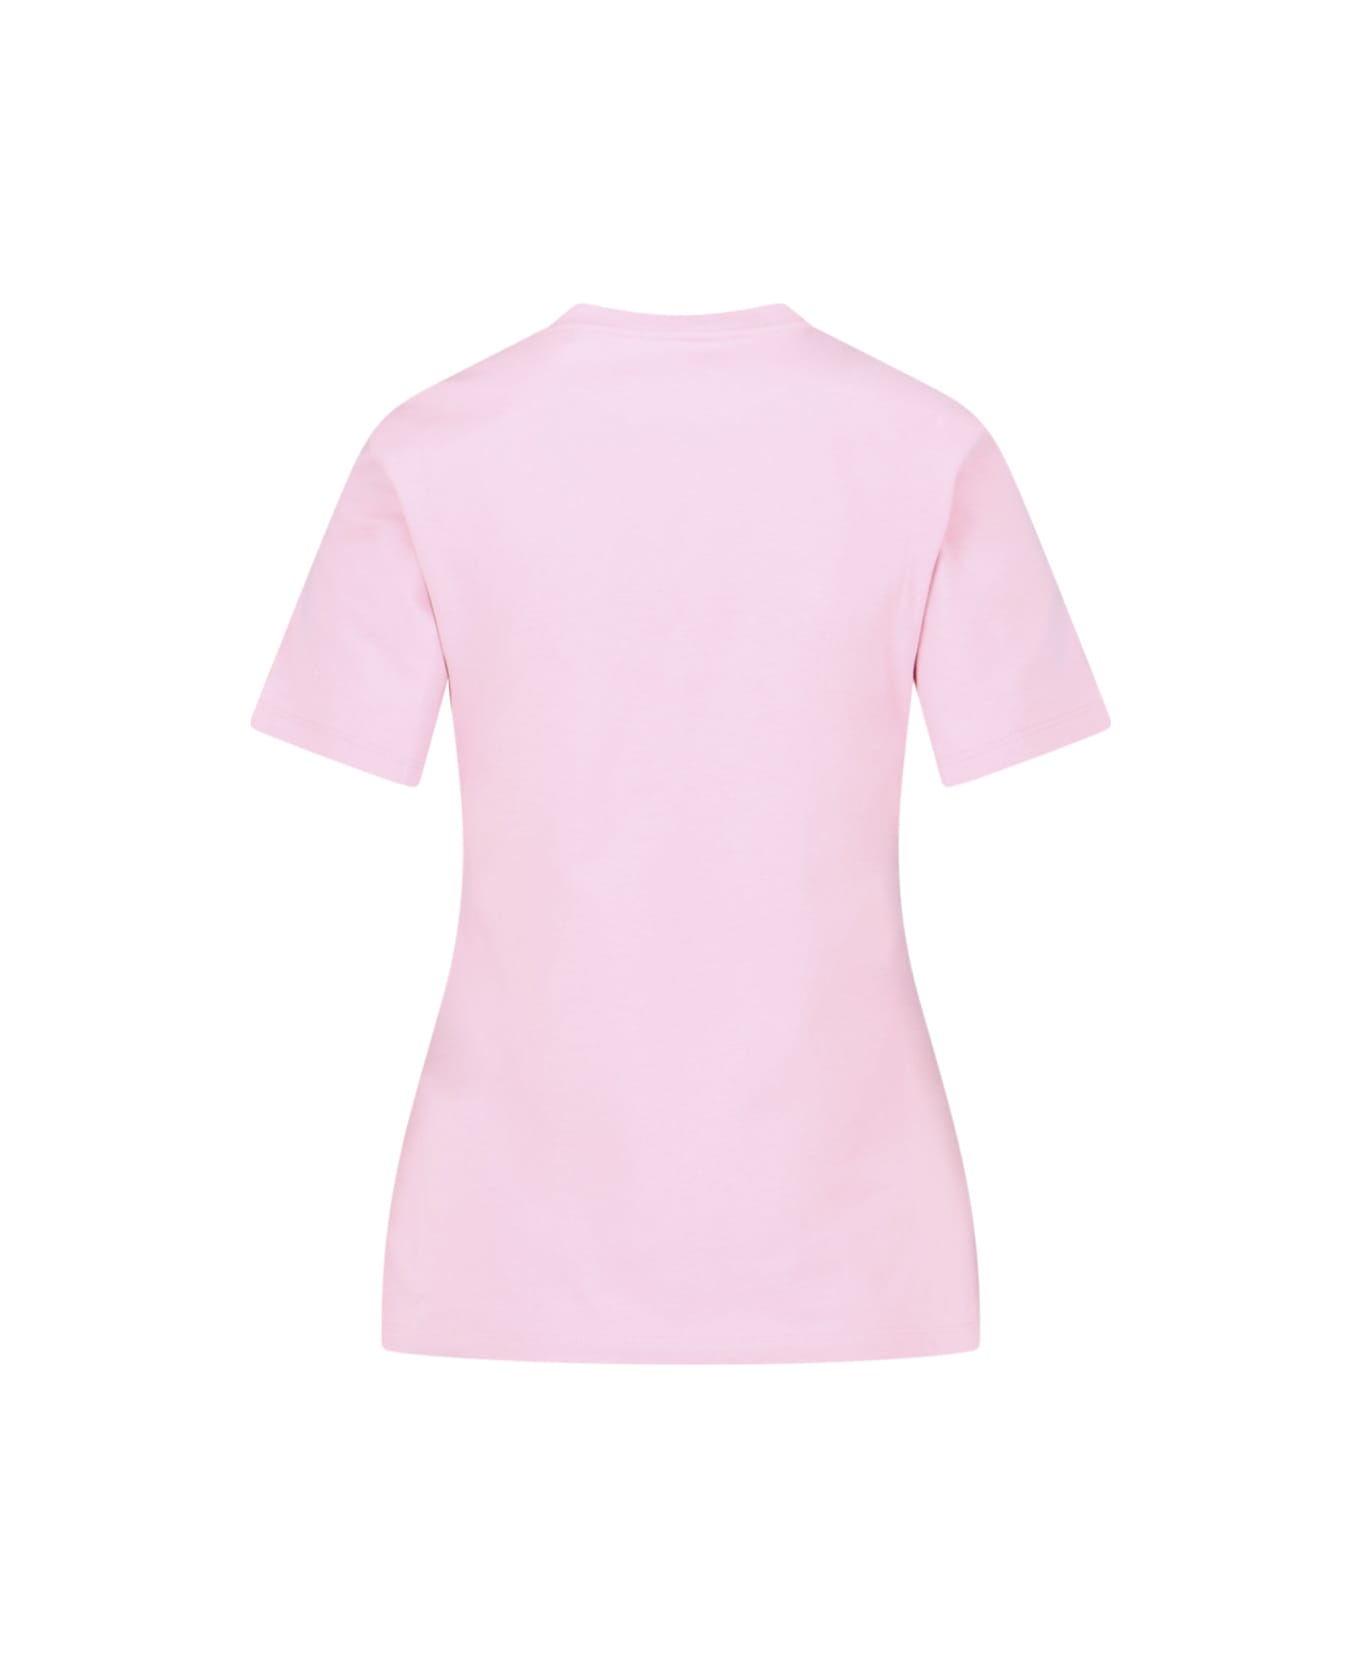 Versace "1978 Re-edition" Logo T-shirt - Pink